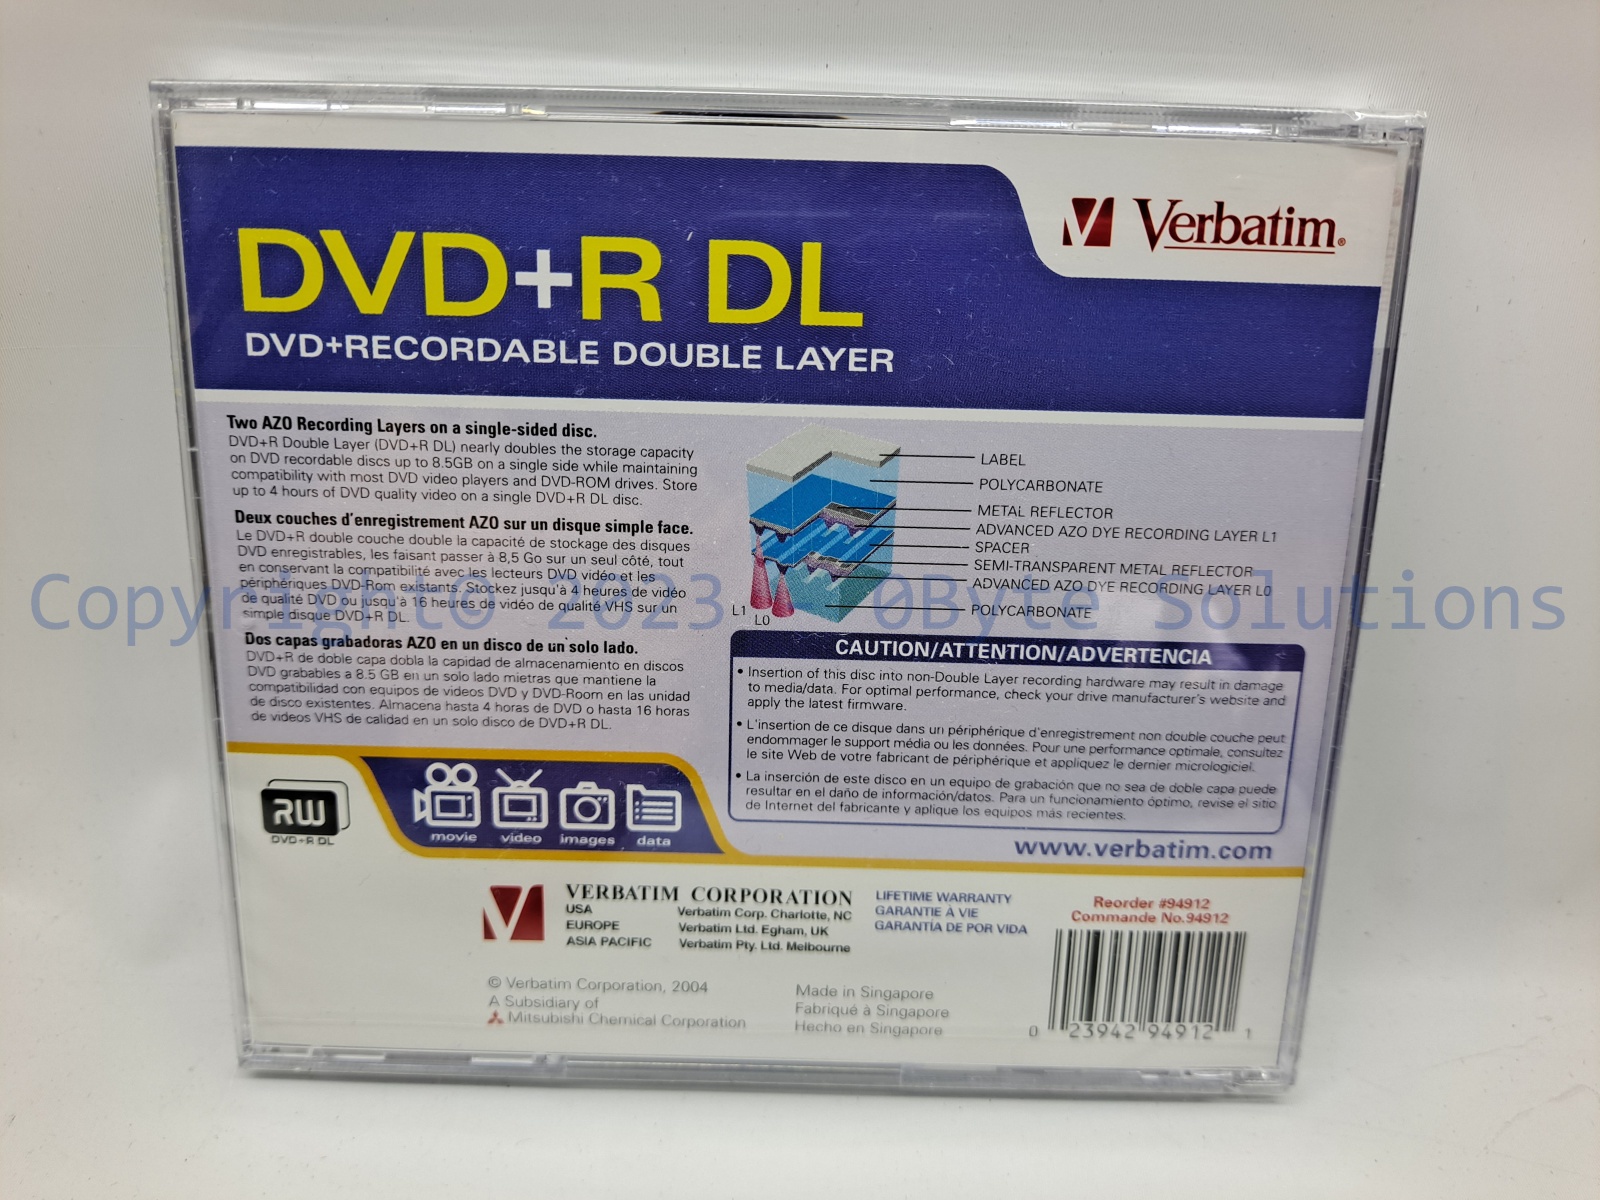 Verbatim #94912 Dual Layer DVD+R DL - 2.4x 8.5GB Media